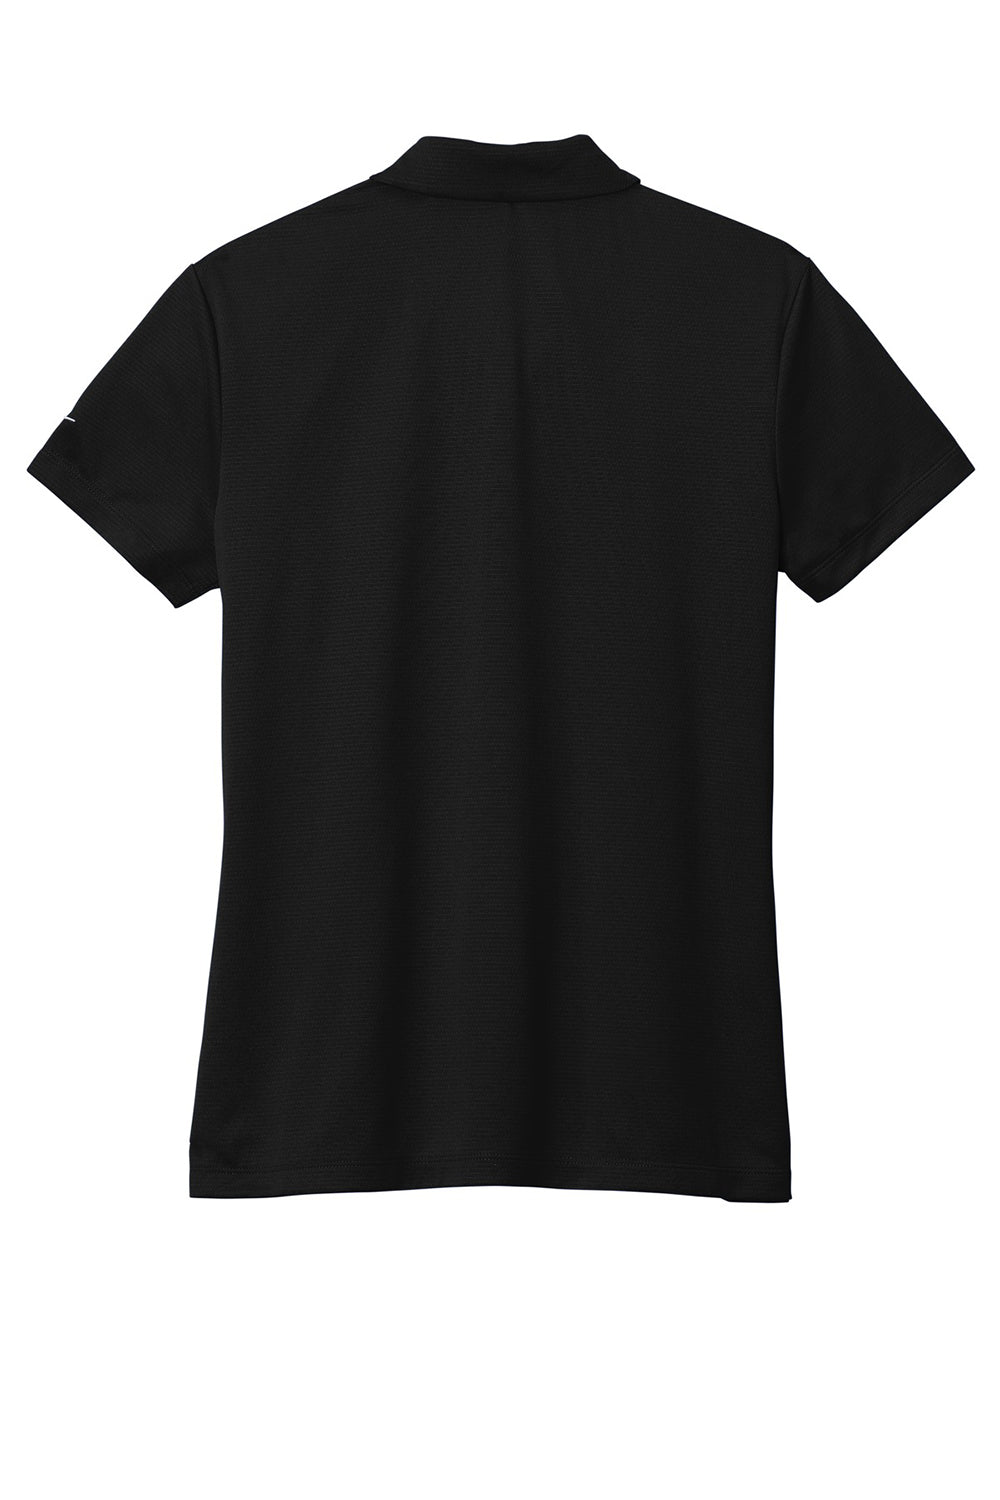 Nike NKBV6043 Womens Essential Dri-Fit Moisture Wicking Short Sleeve Polo Shirt Black Flat Back